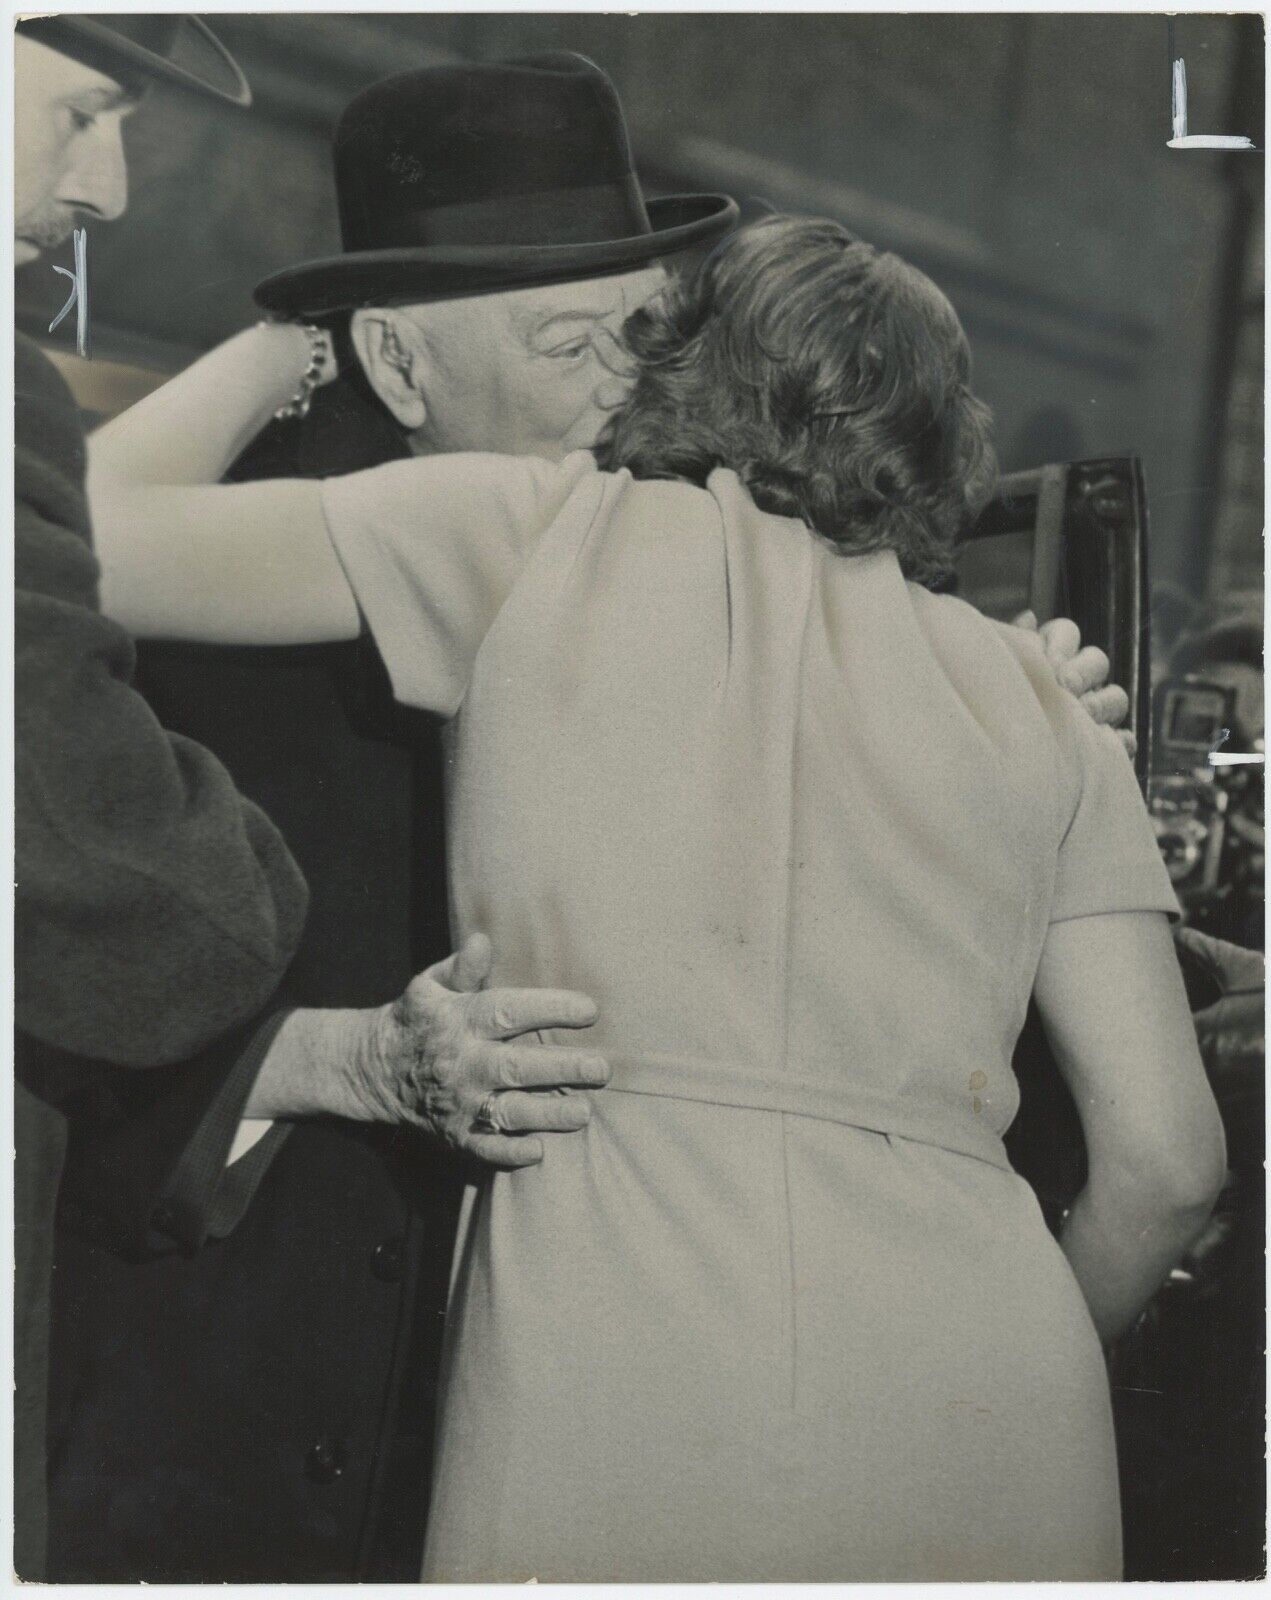 1 April 1963 press photo of Sir Winston S. Churchill, hugging his daughter